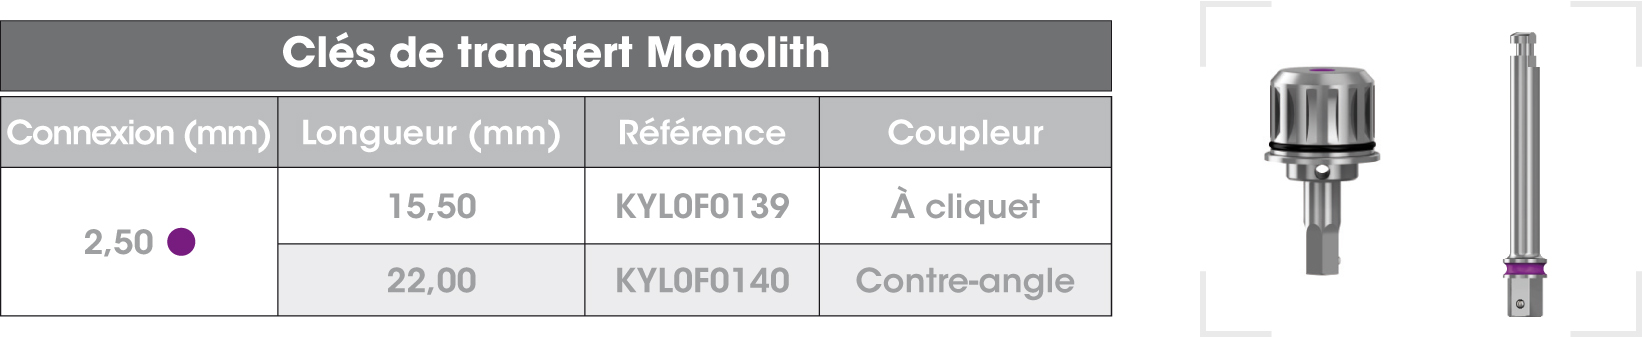 Cle-transfert-Monolith-FR